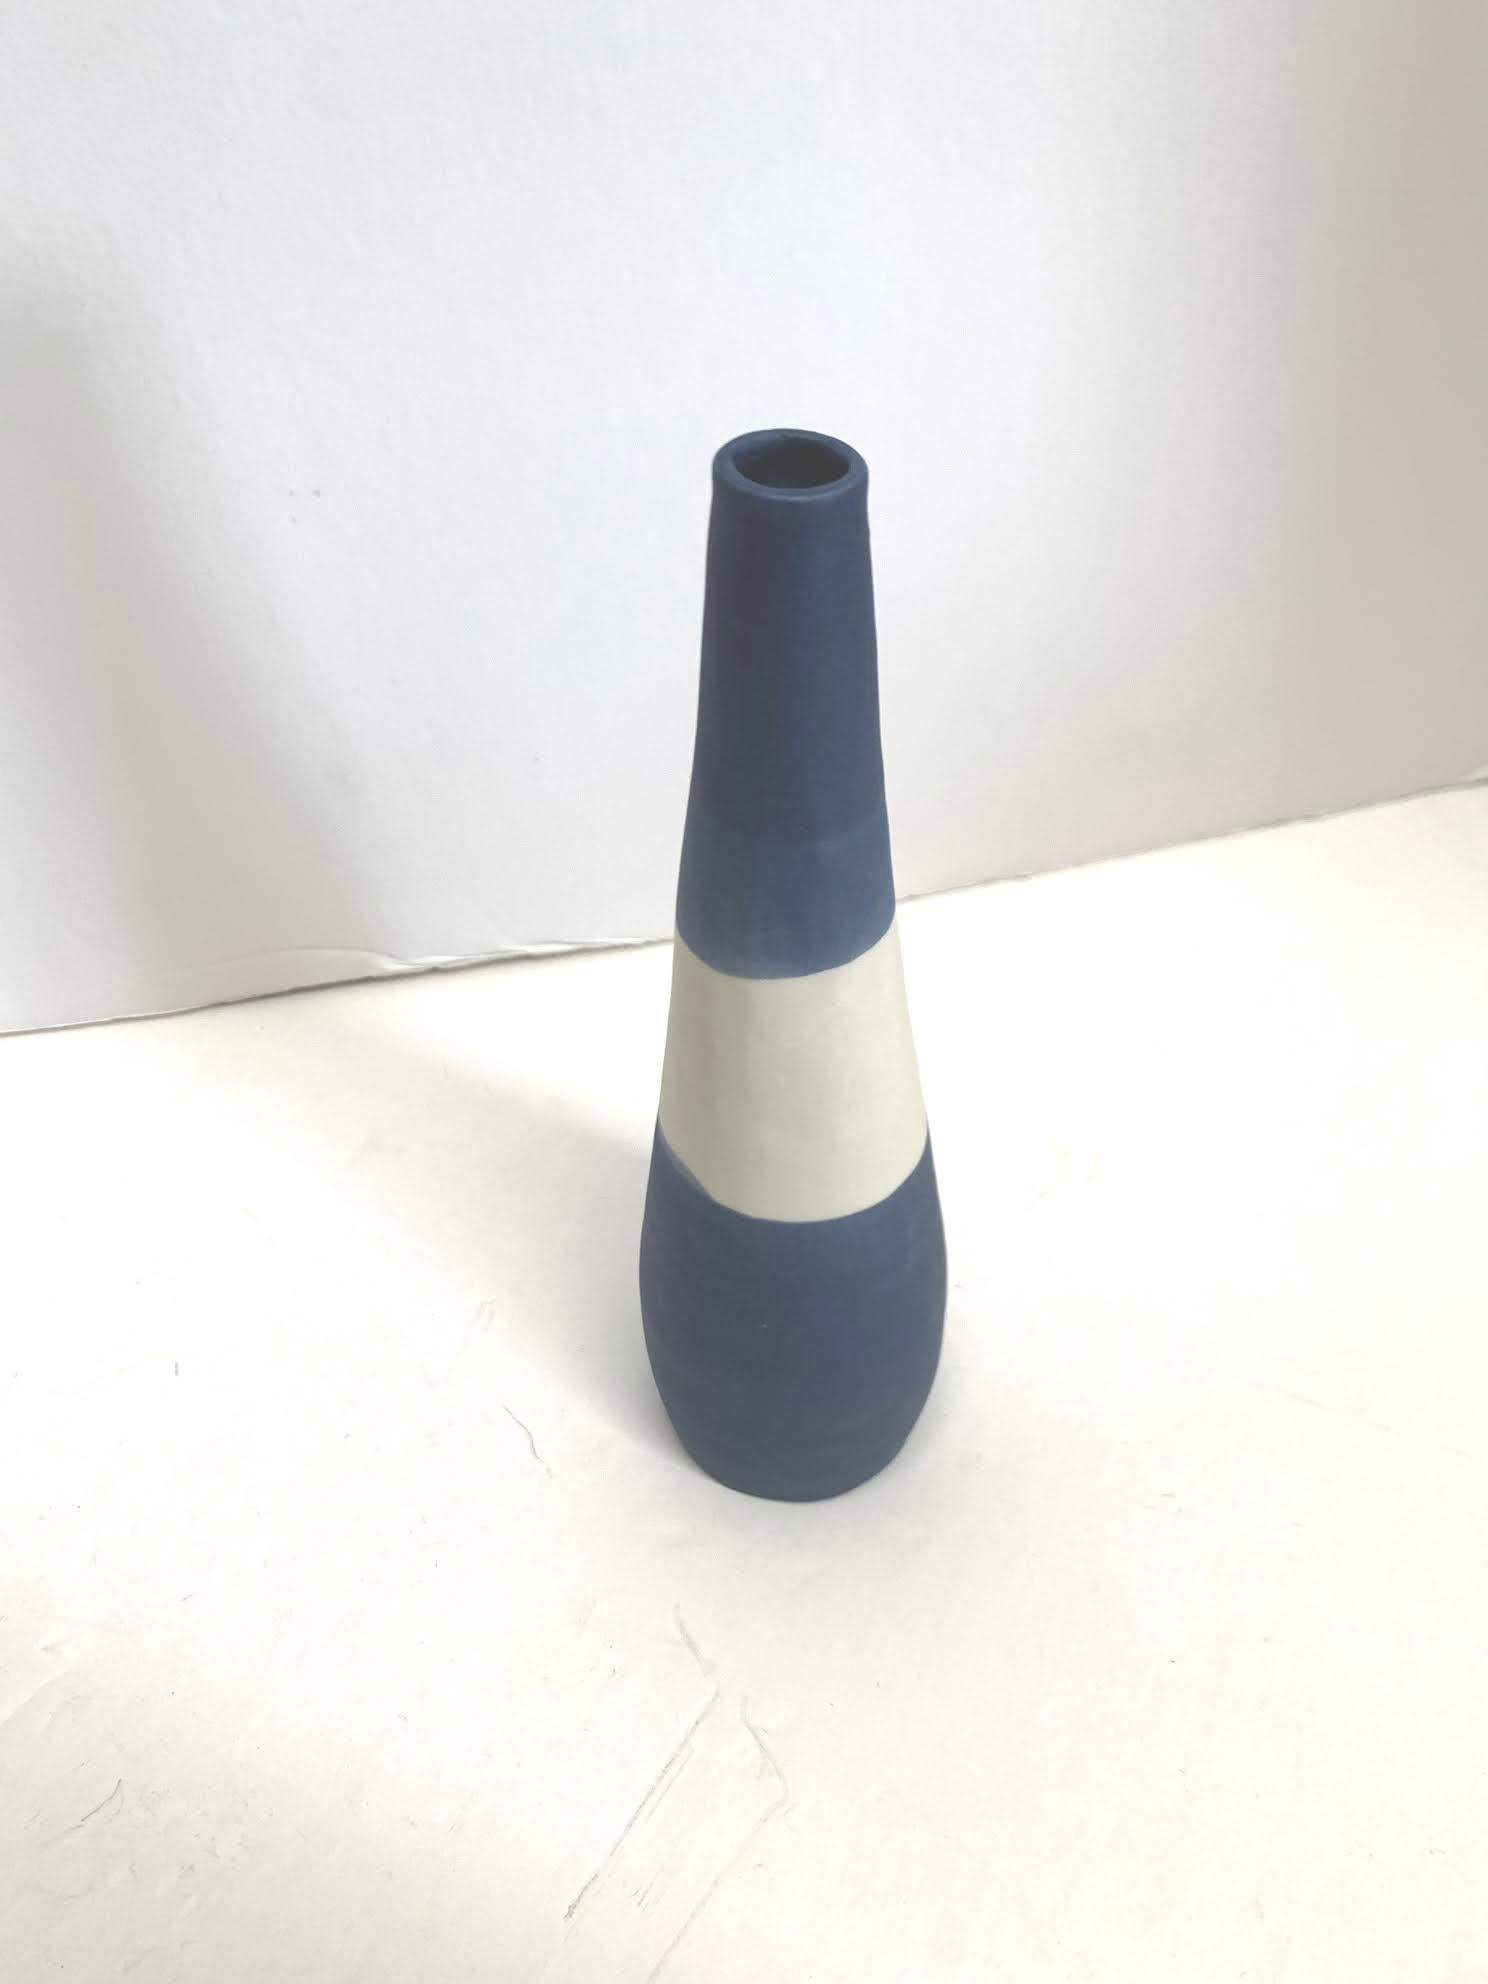 Contemporary Italian hand made ceramic blue ground thin vase with white color block design.
Matte glaze.
